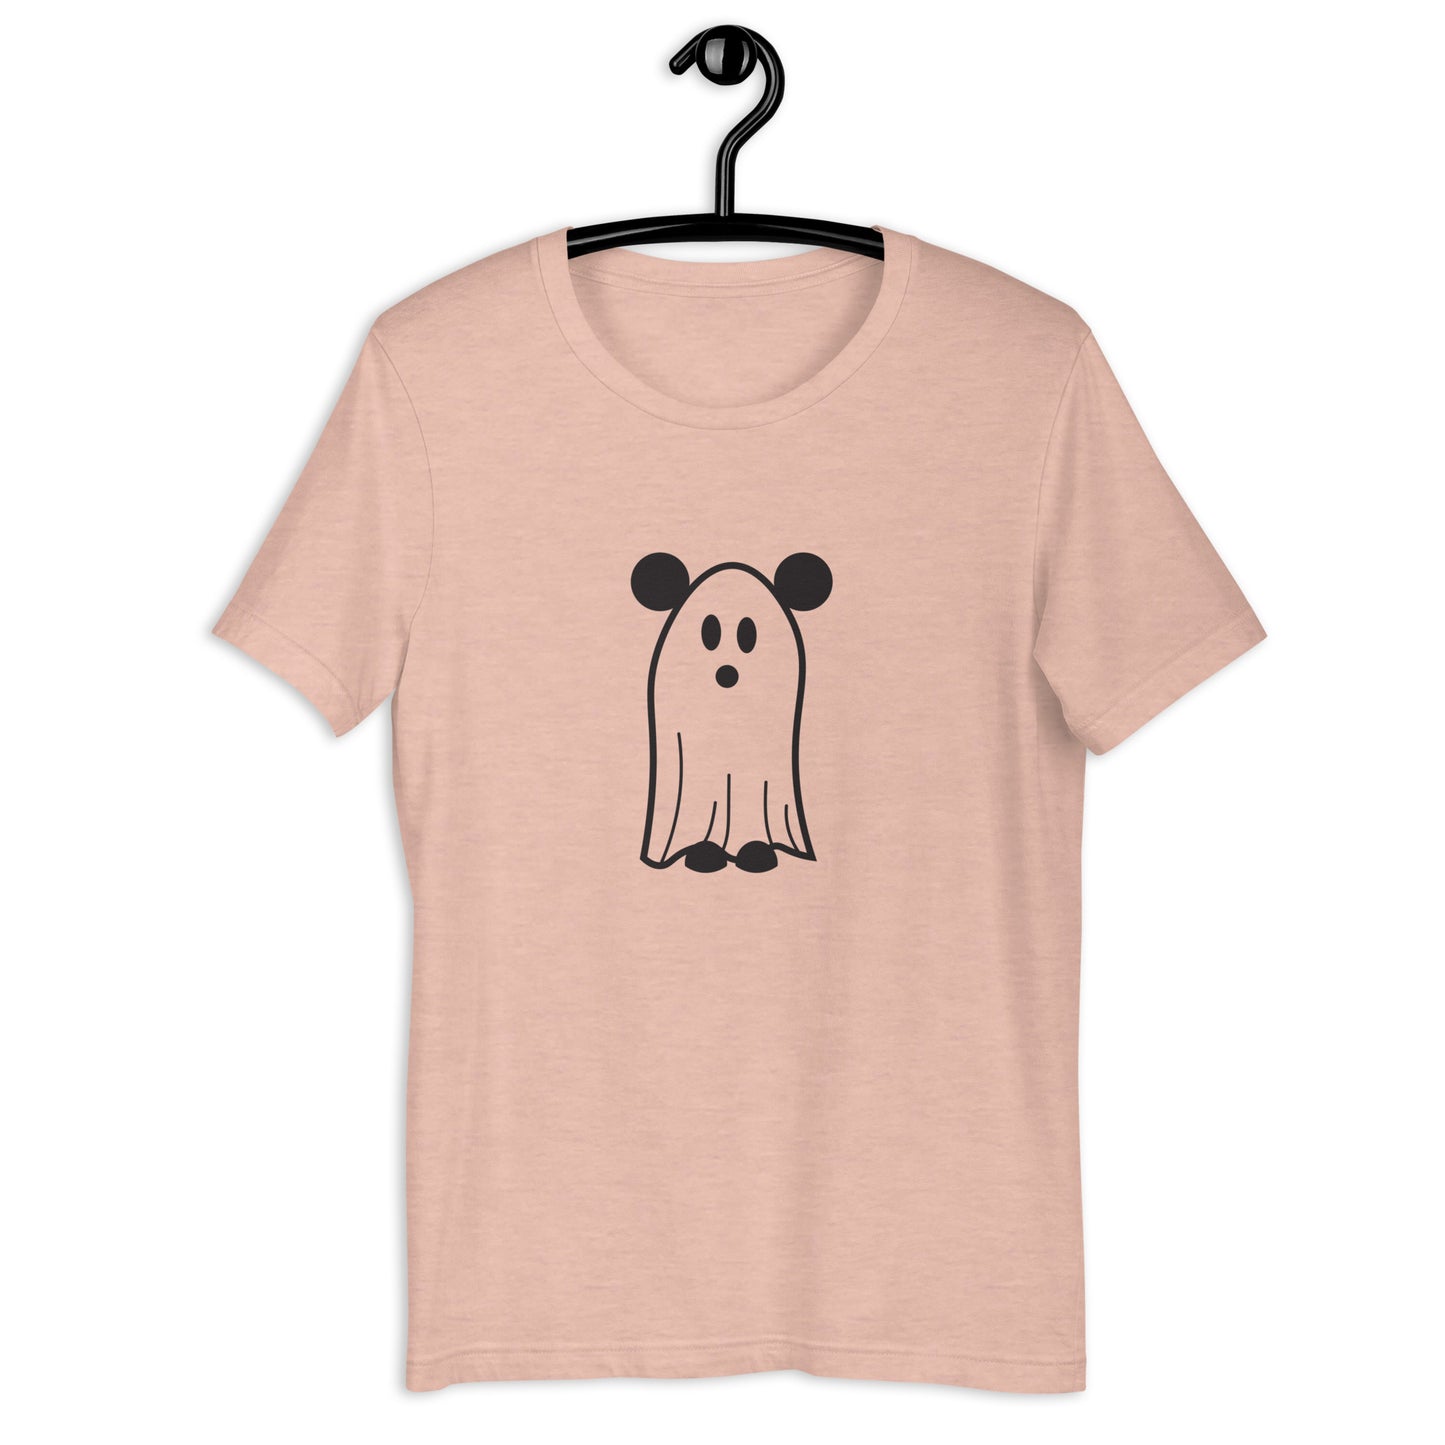 Ghost Mickey - Unisex t-shirt